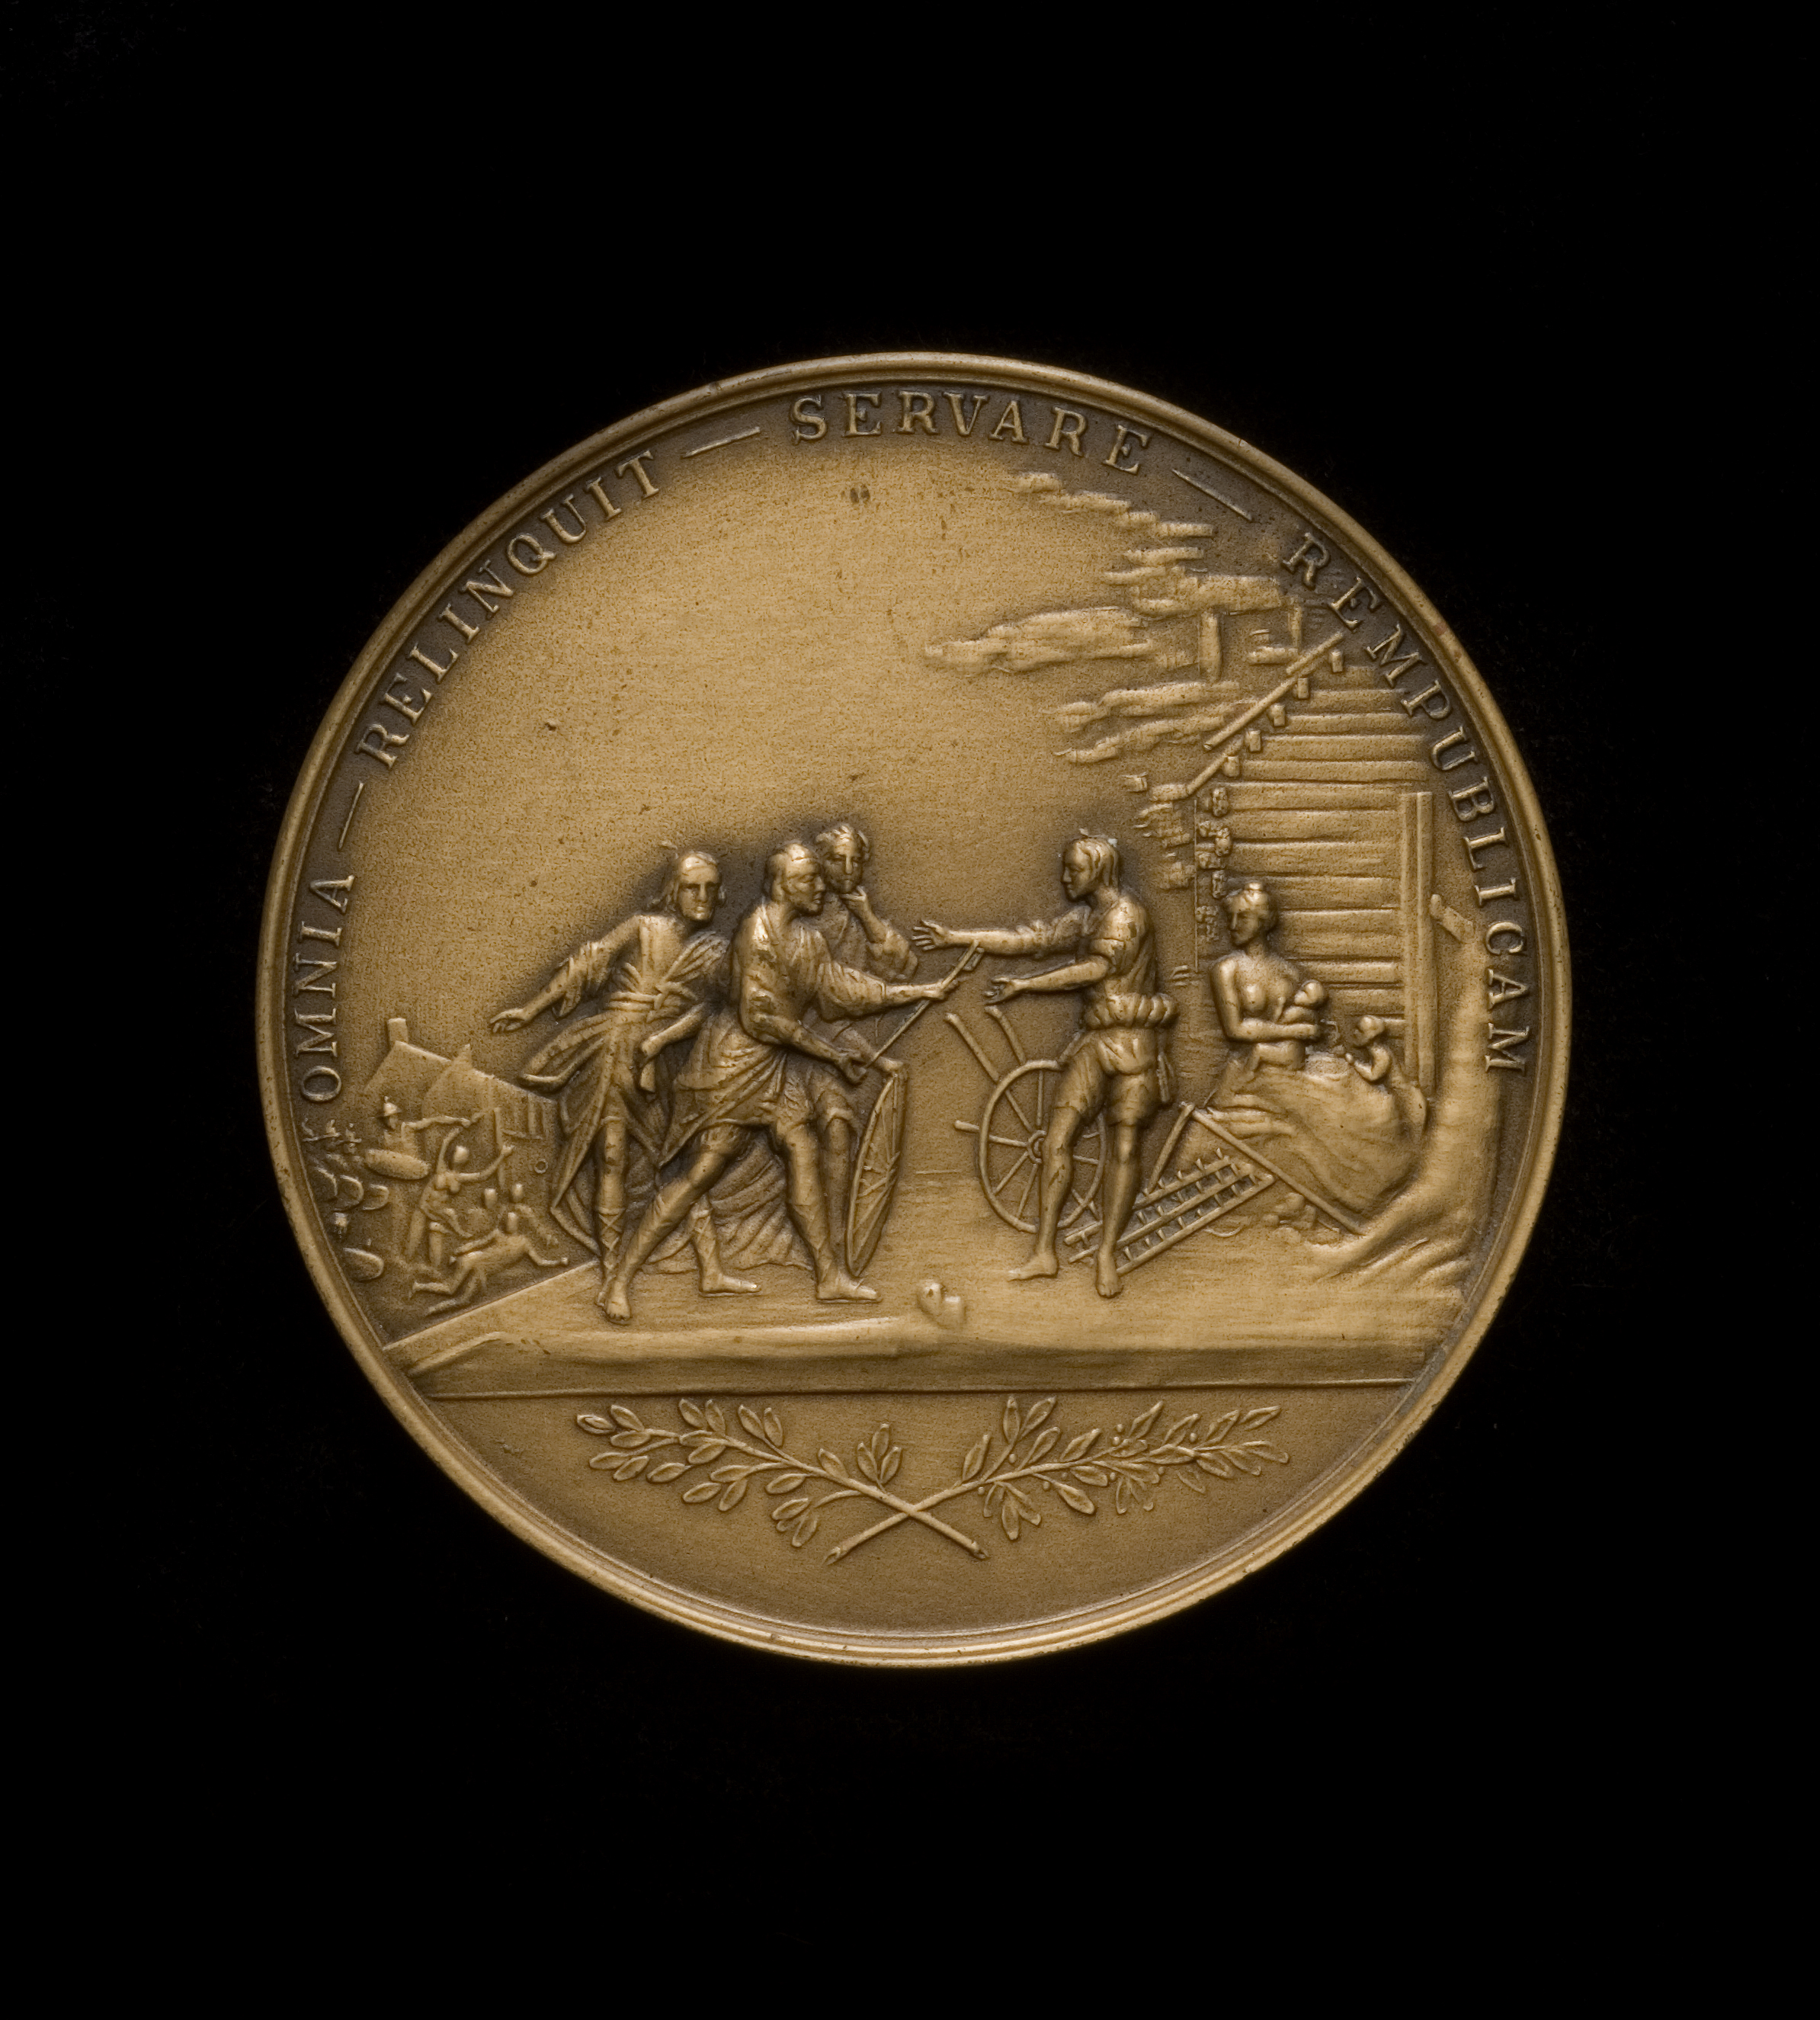 Society of the Cincinnati medal designed by L'Enfant, 1914